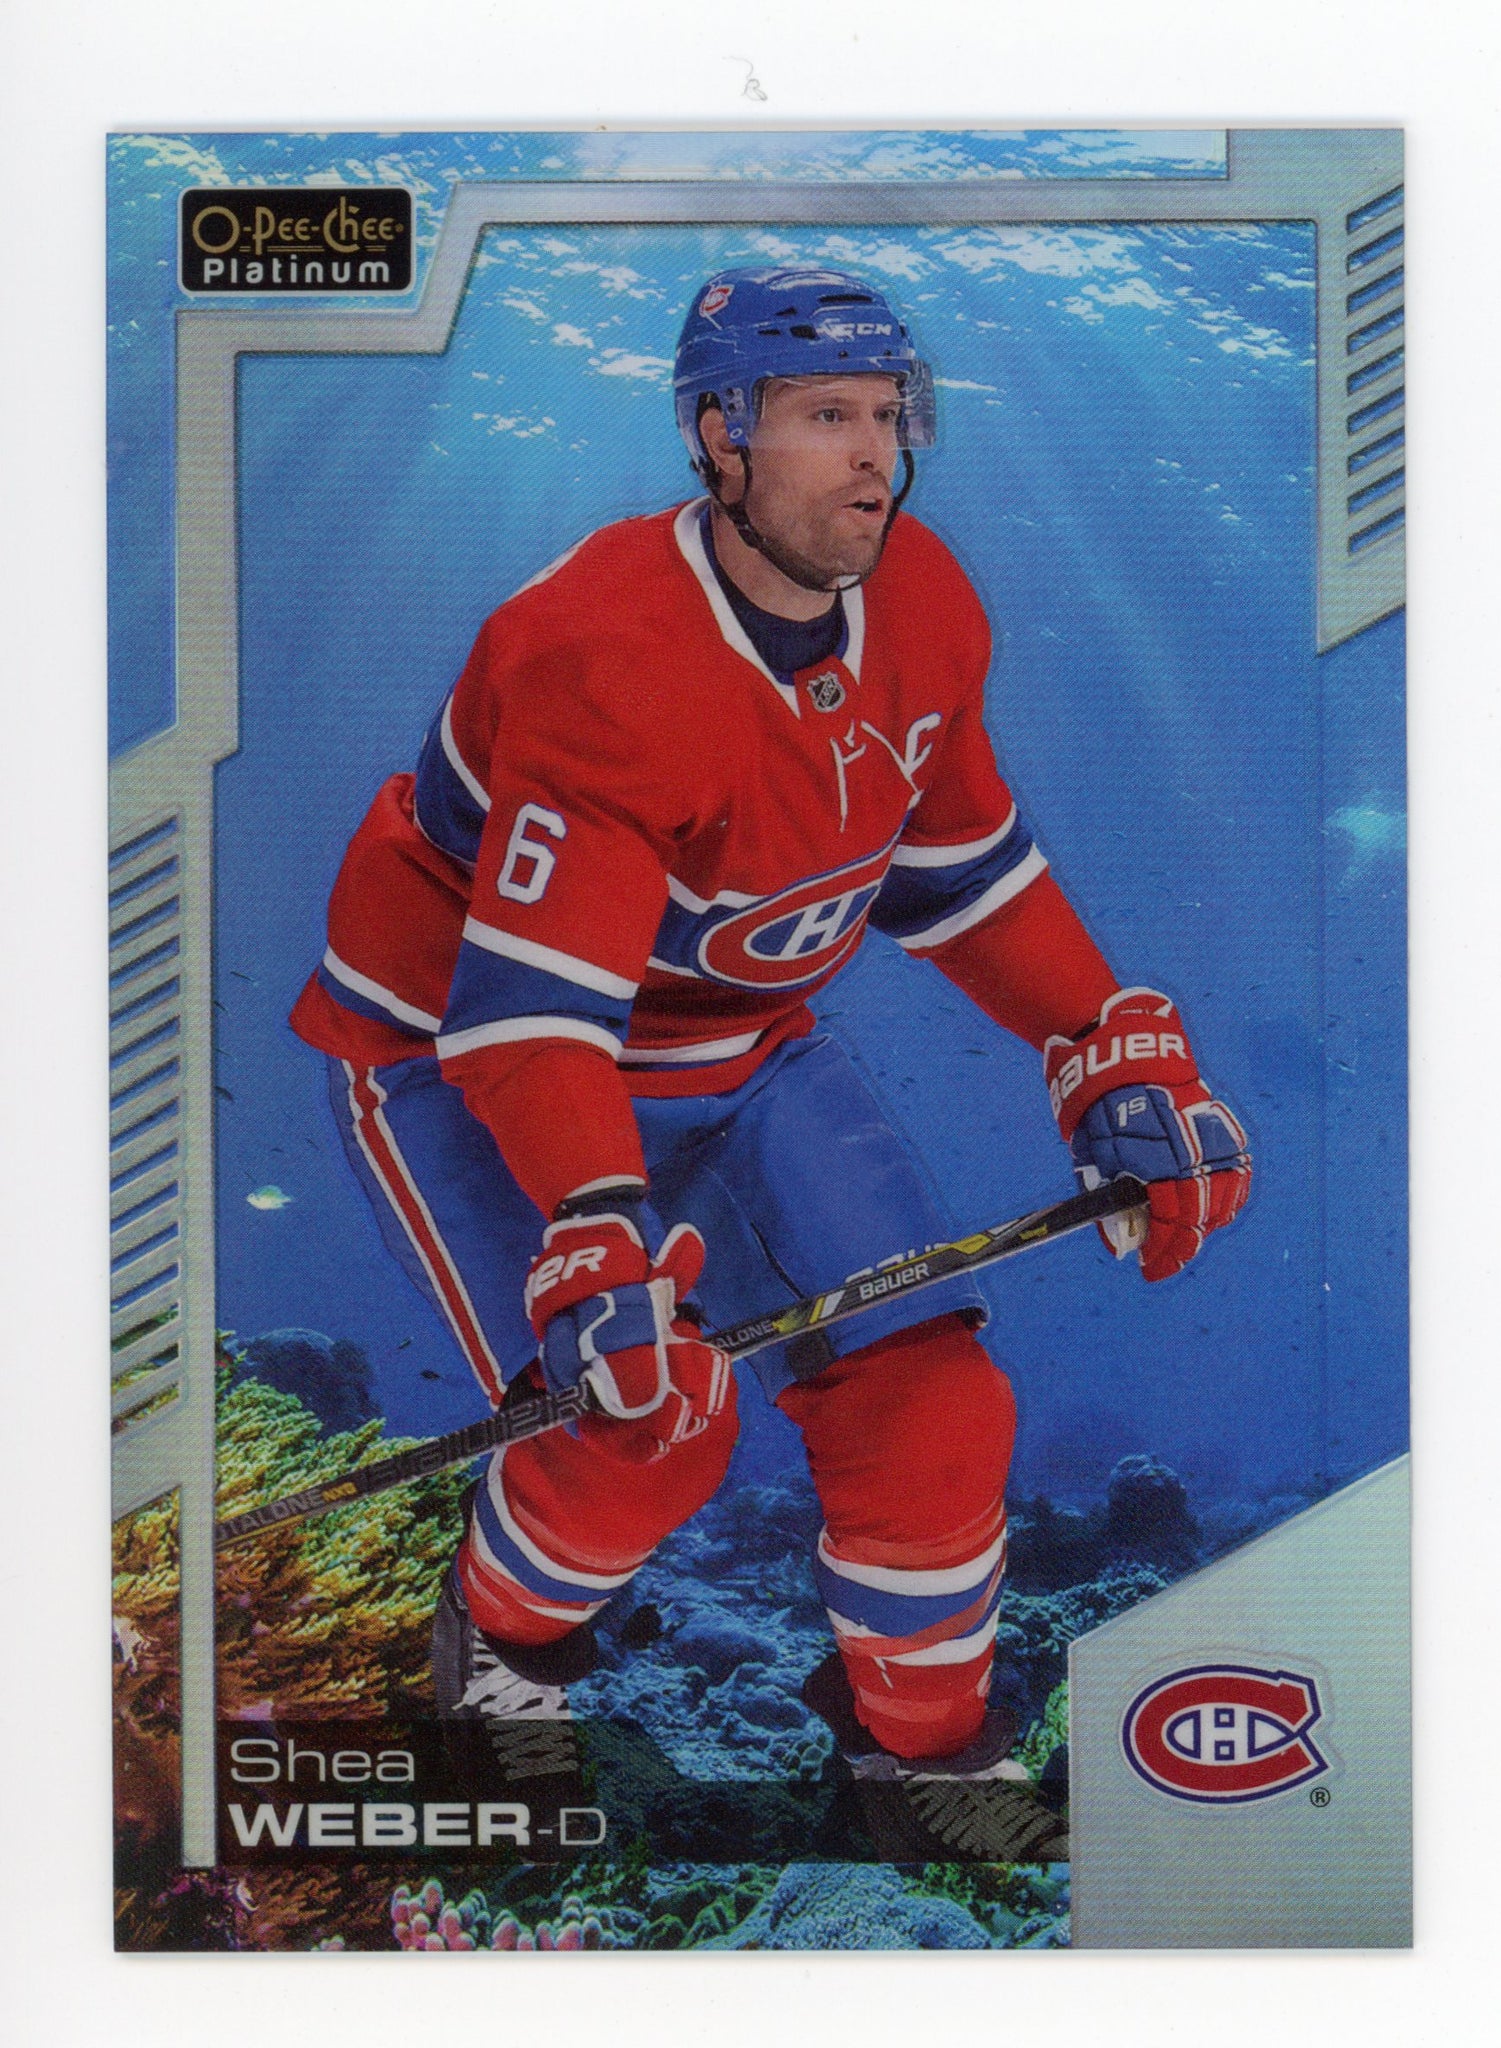 2020-2021 Shea Weber Aquamarine #d /499 Montreal Canadiens #23